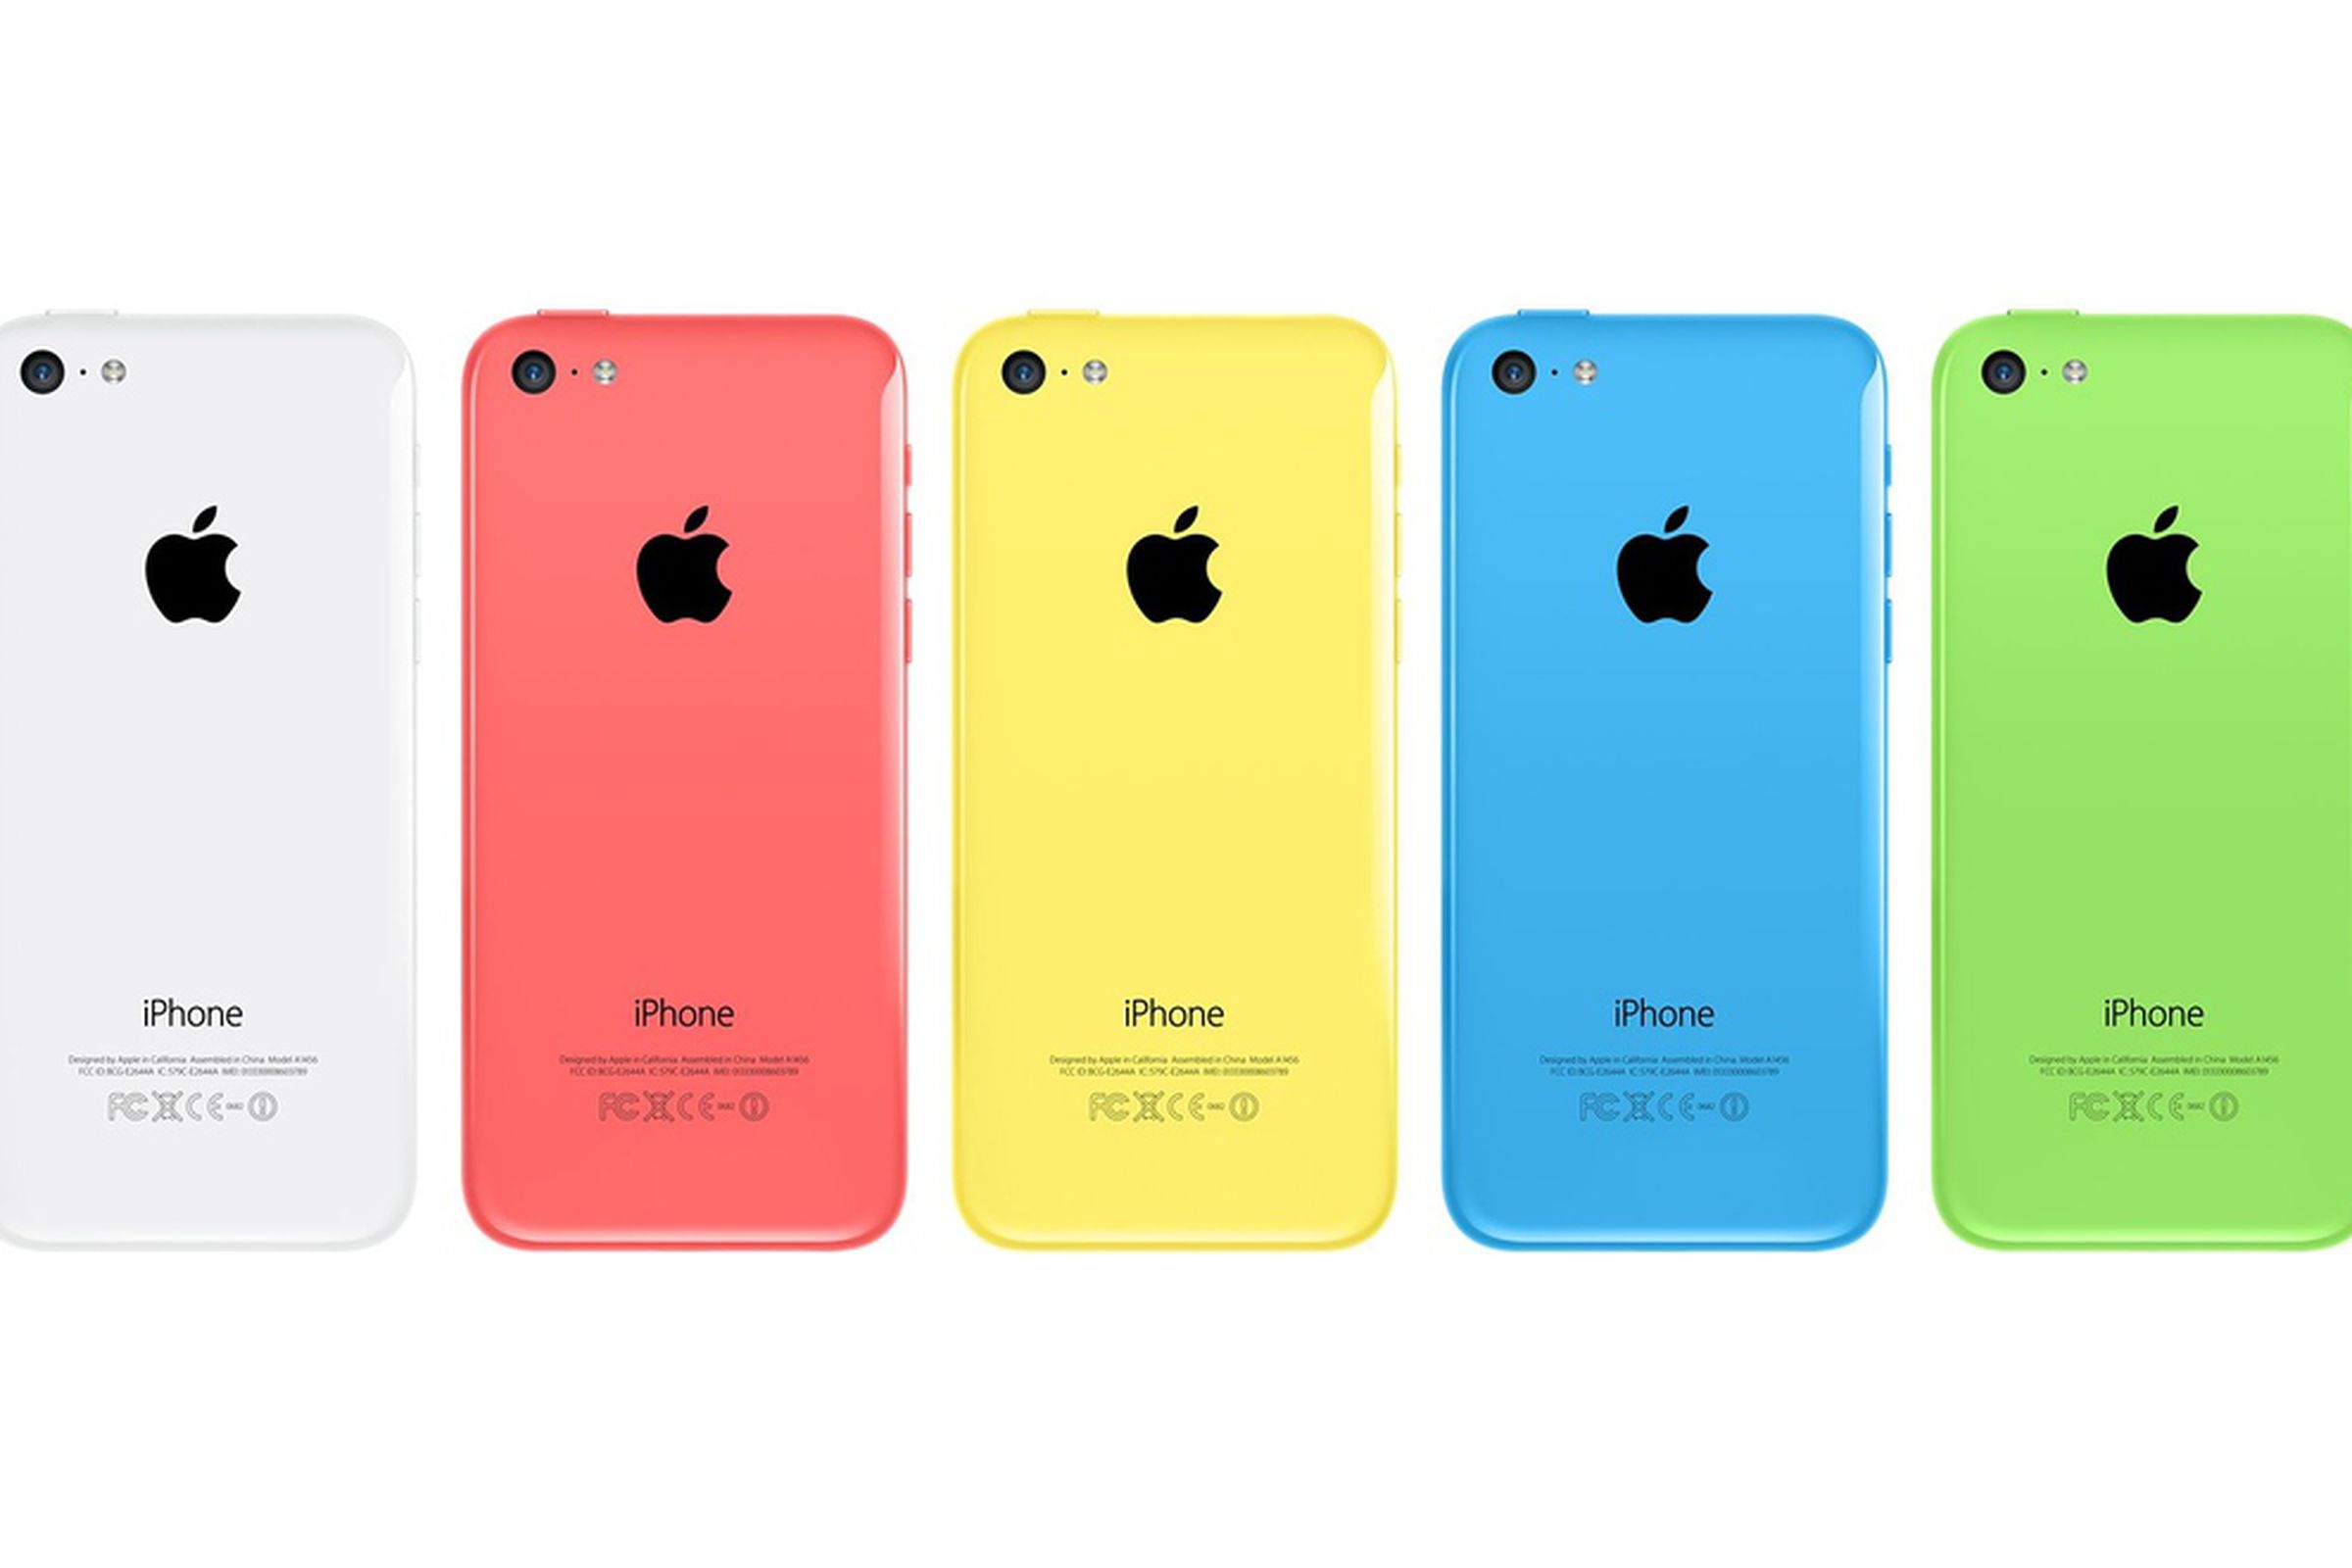 iPhone 5c press colors